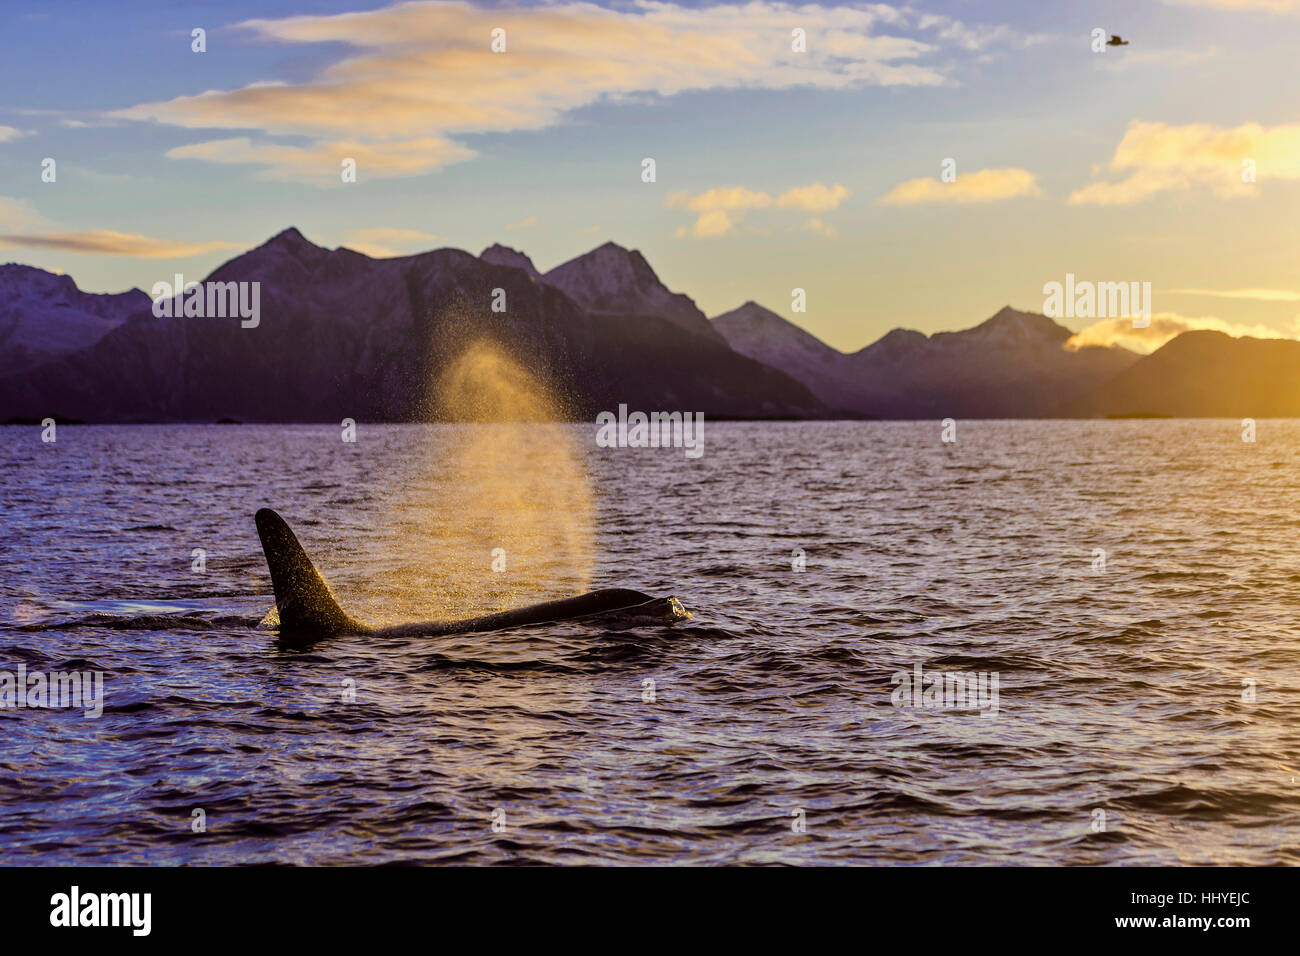 Orca (Orcinus orca) blows, sunset, mountains at back, Kaldfjorden, Tromvik, Norway Stock Photo